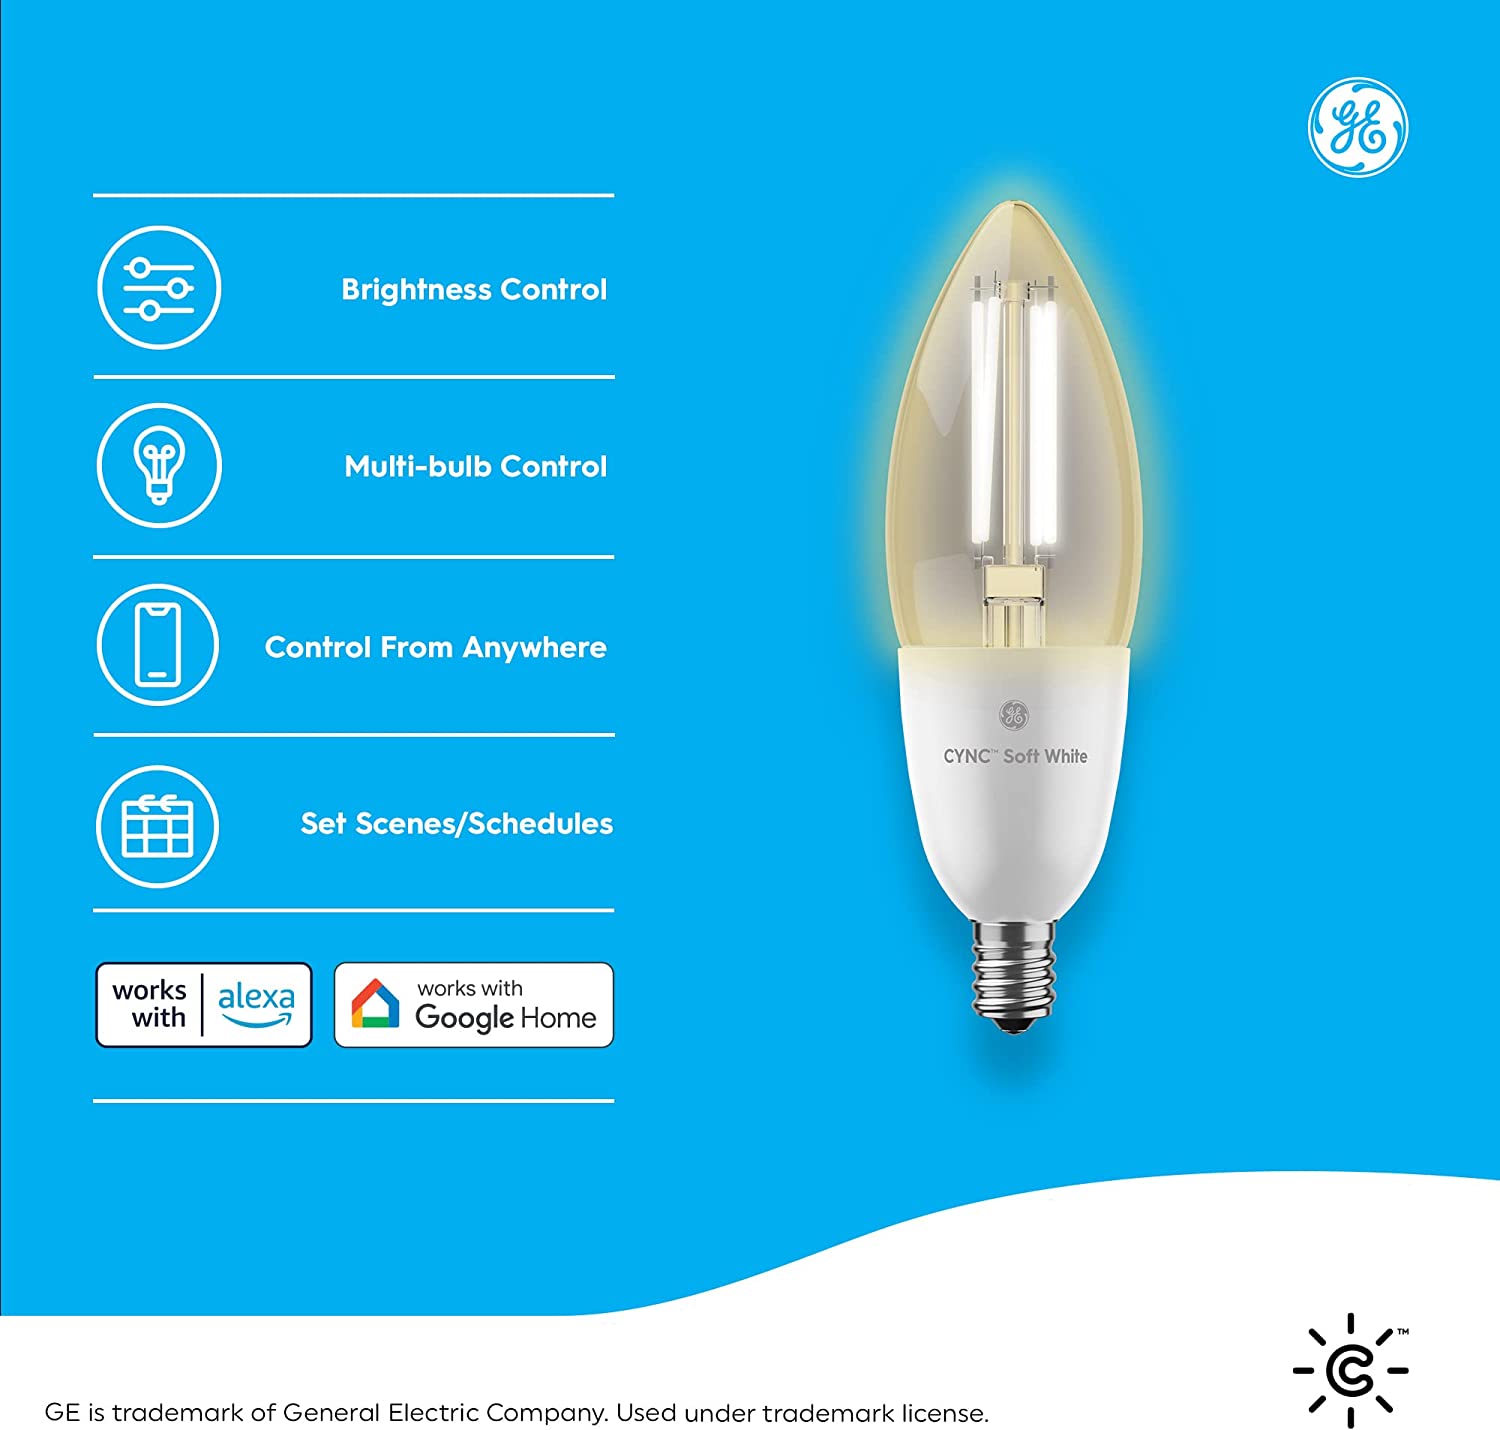 GE CYNC Smart LED Light Bulbs, Soft White, Bluetooth and Wi-Fi, Works with Alexa and Google Home, Decorative Bulbs, Small Base (4 Pack)